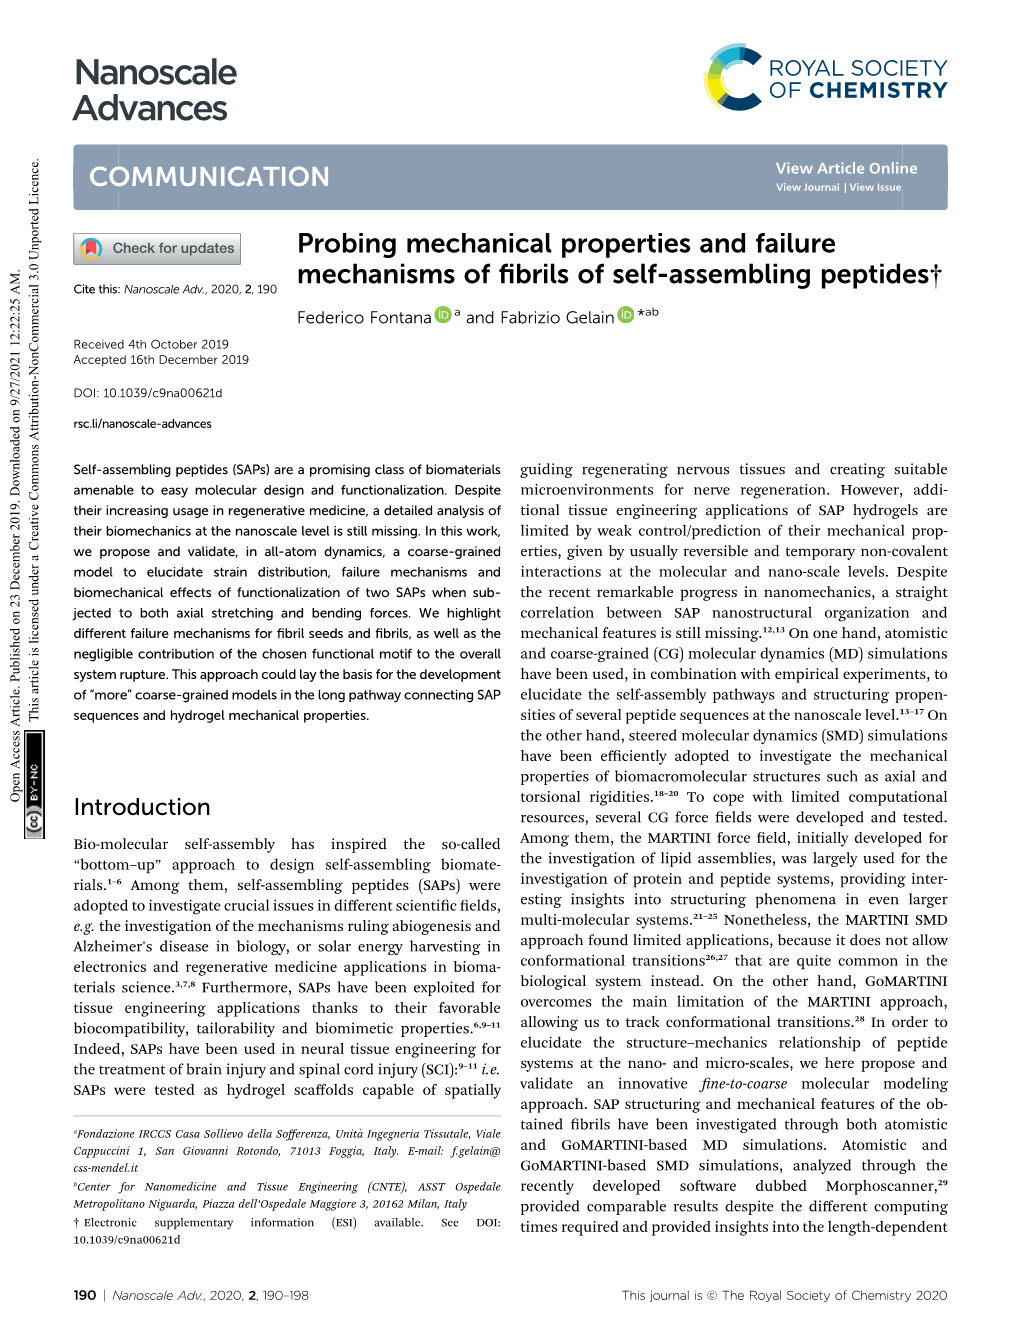 Probing Mechanical Properties and Failure Mechanisms of Fibrils of Self-Assembling Peptides